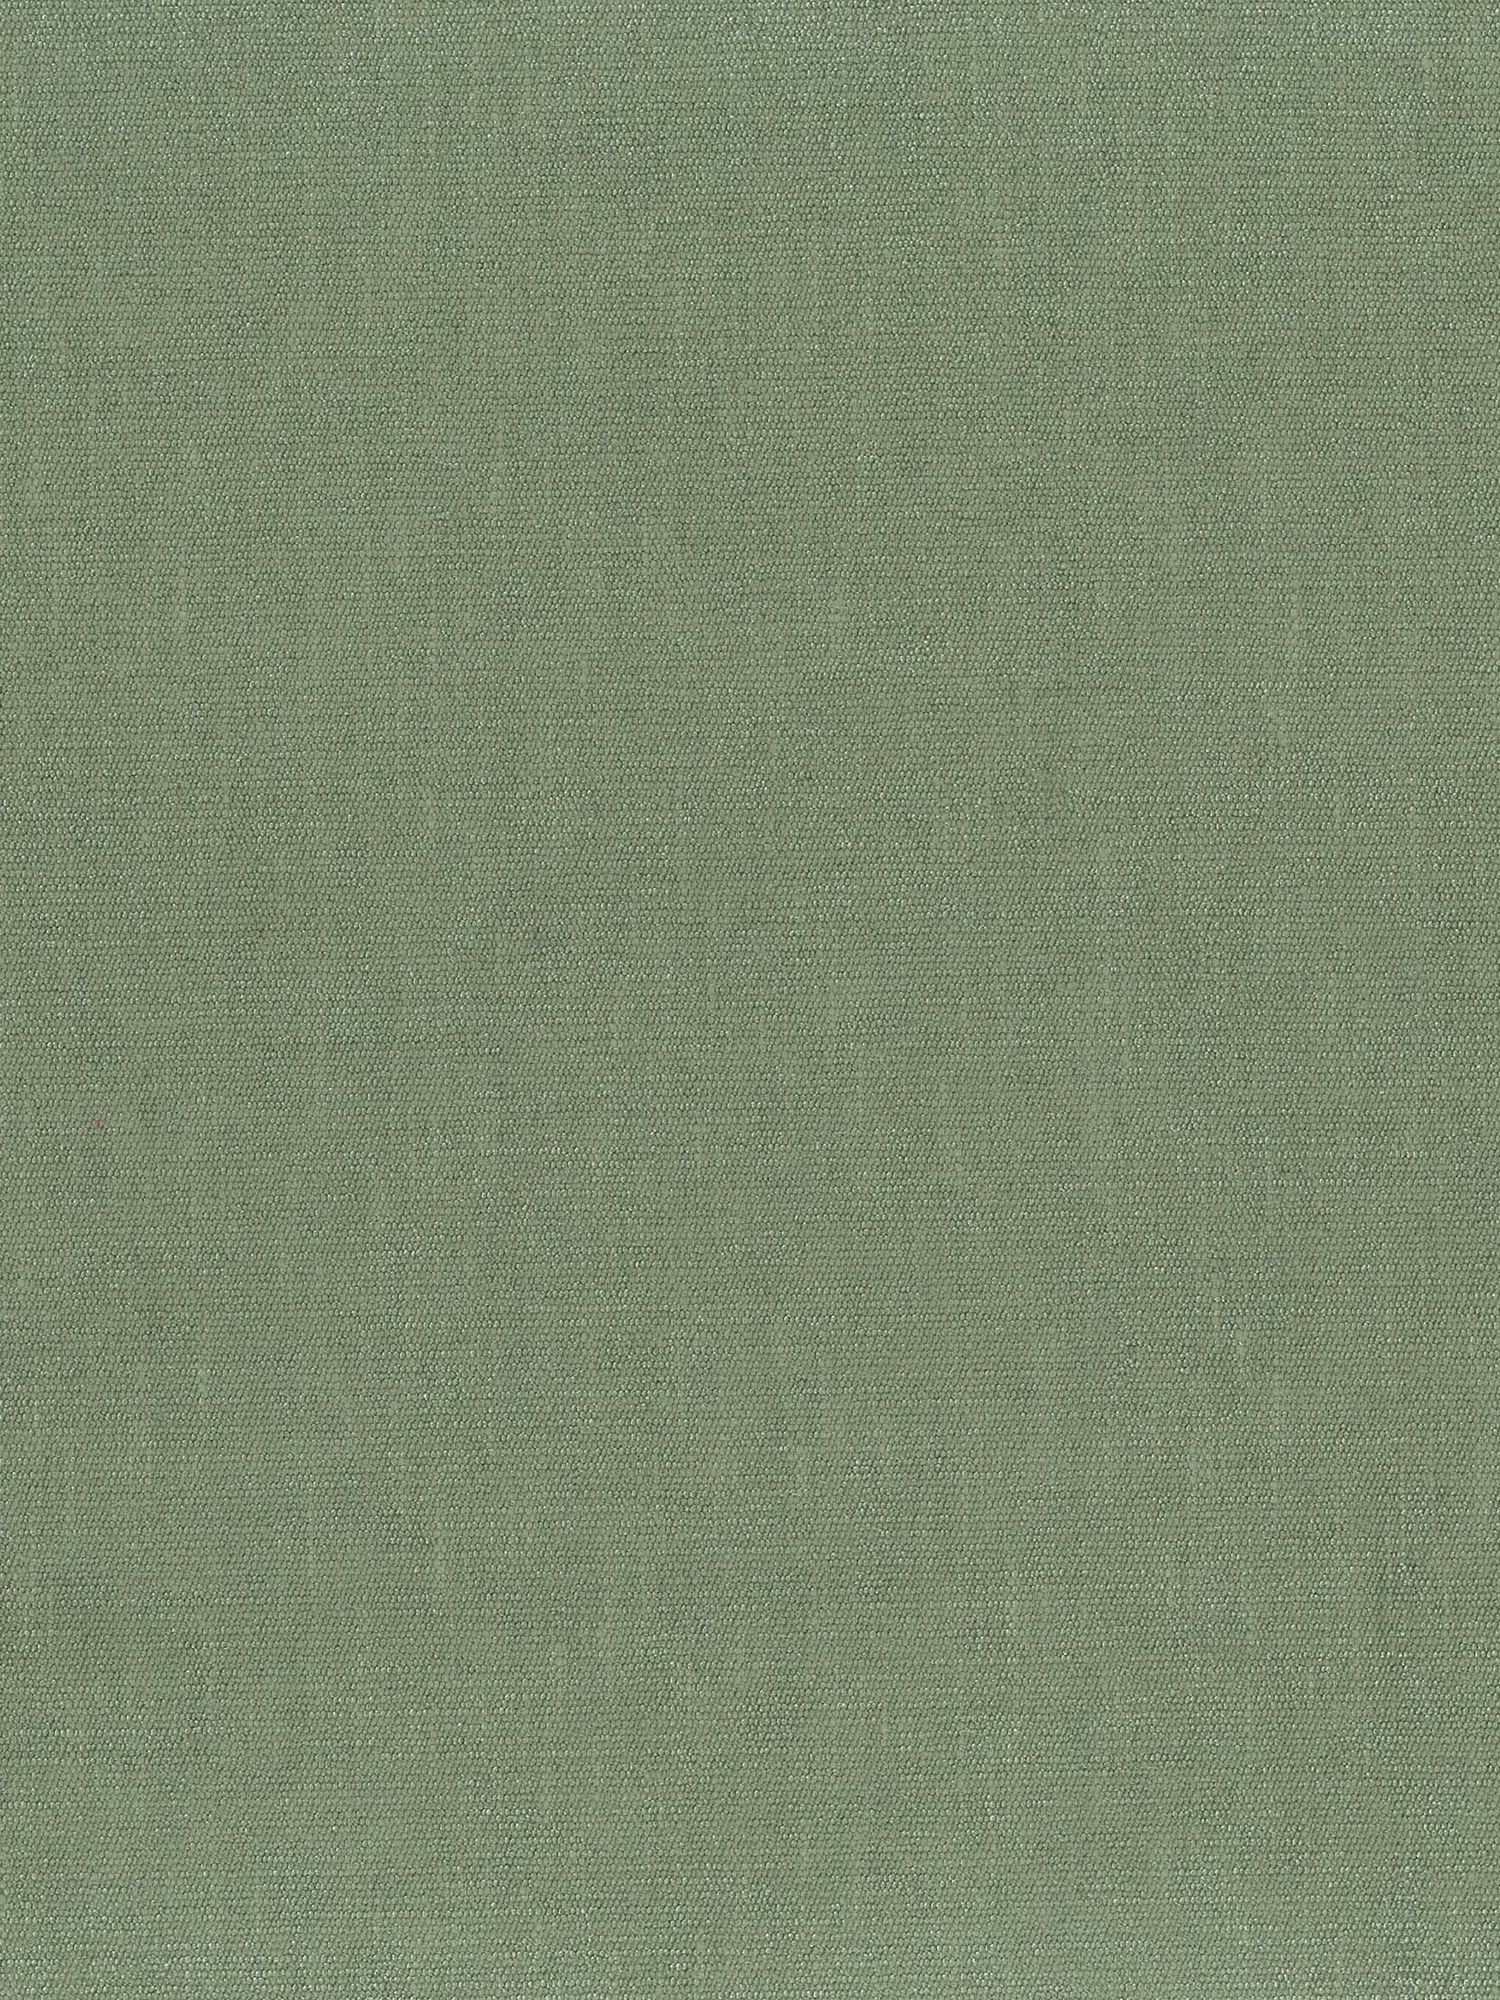 Osborne & Little Firma Furnishing Fabric, Lichen